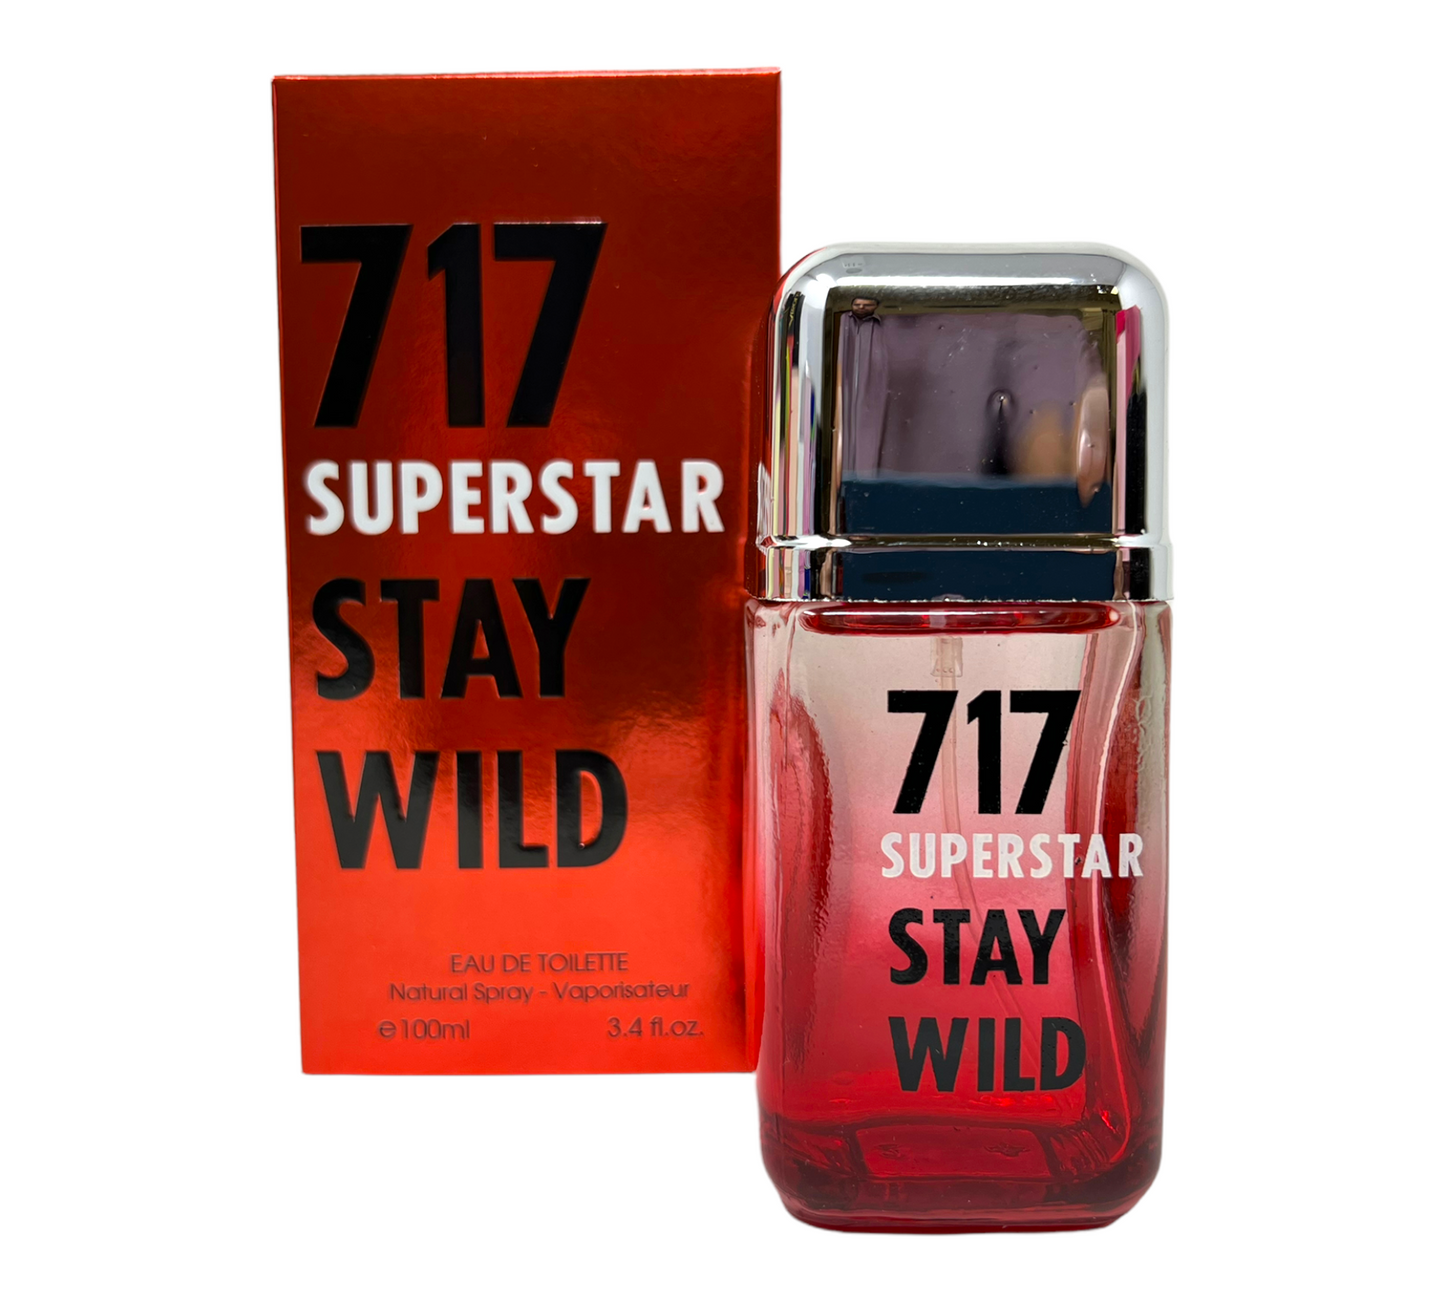 717 Superstar Stay Wild for Men